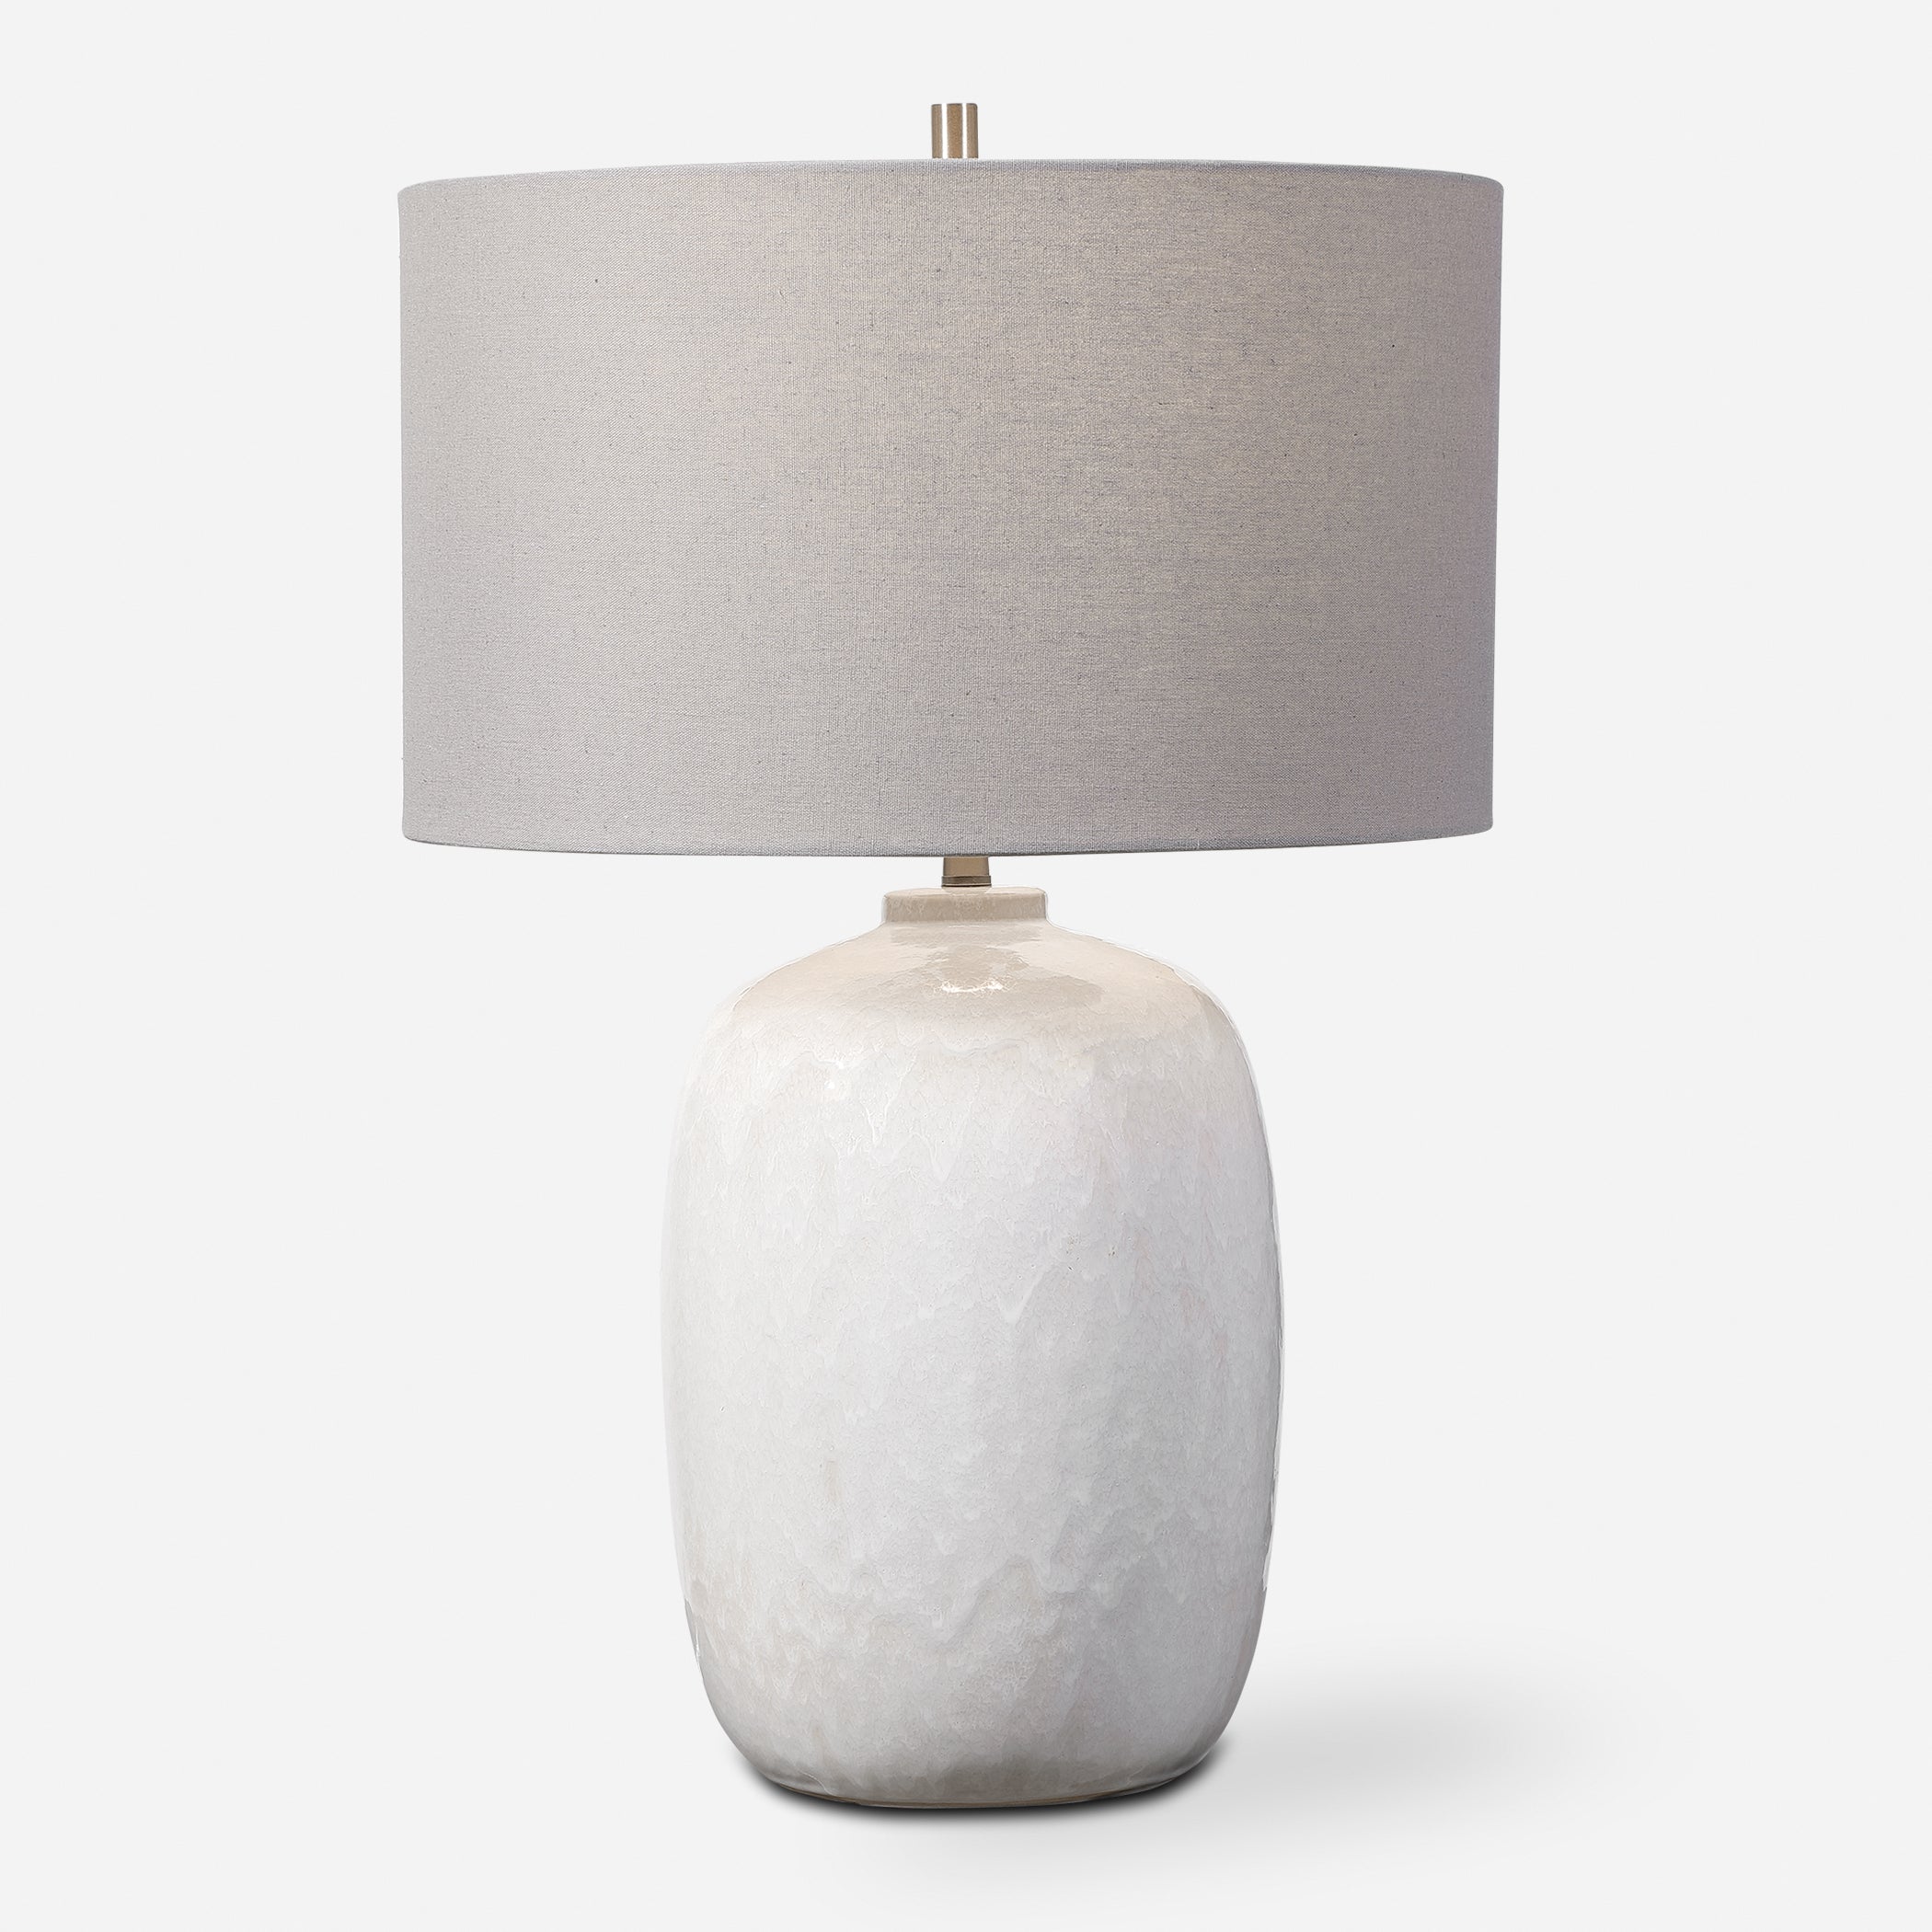 Uttermost Winterscape White / Ivory Glaze Table Lamp White / Ivory Glaze Table Lamp Uttermost   